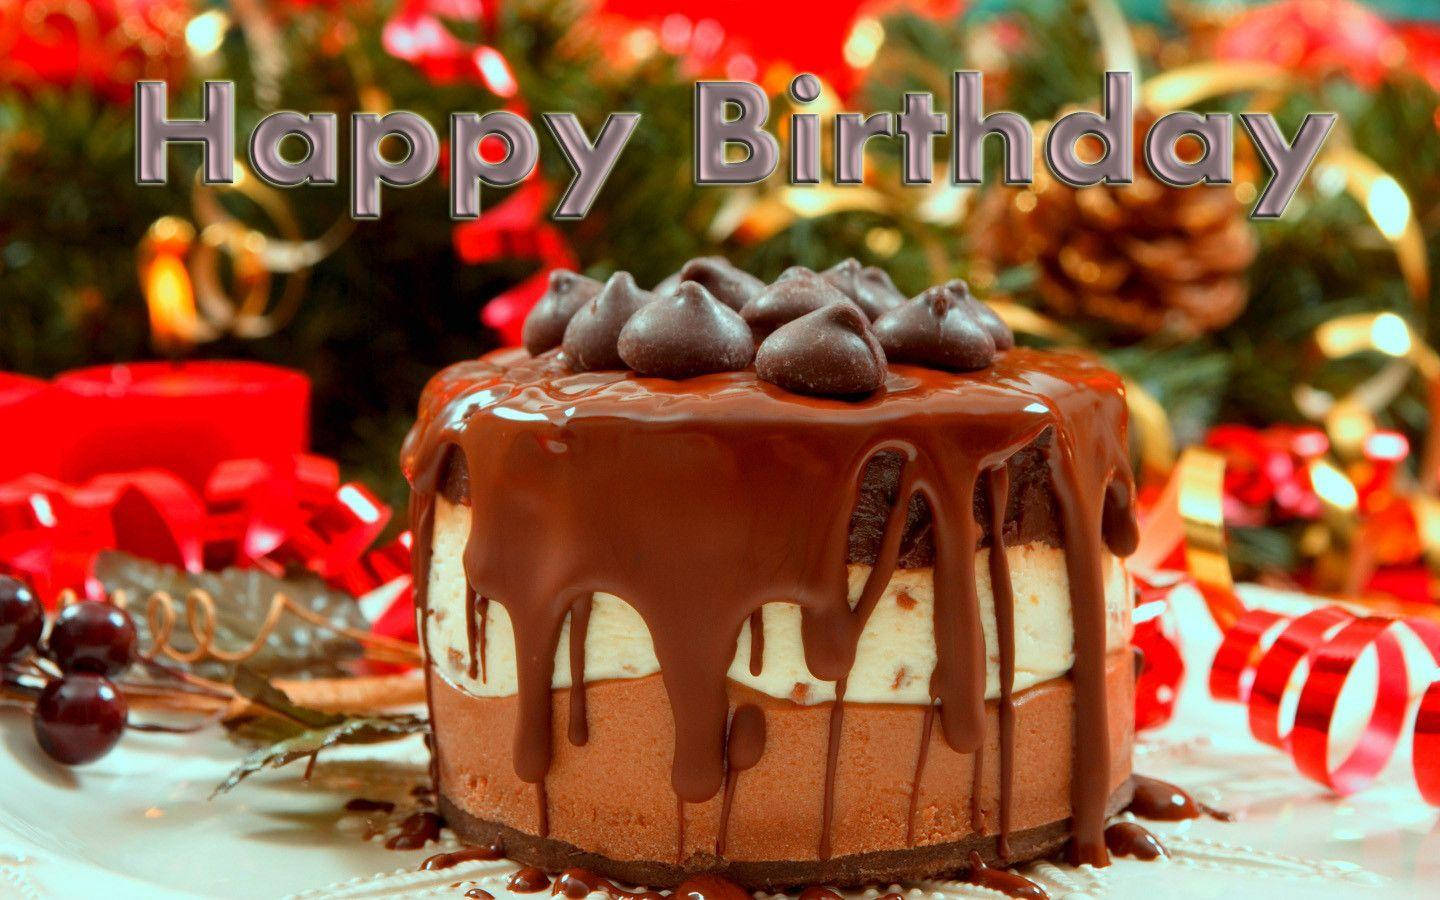 Birthday Cake With Gooey Chocolate Icing Wallpaper